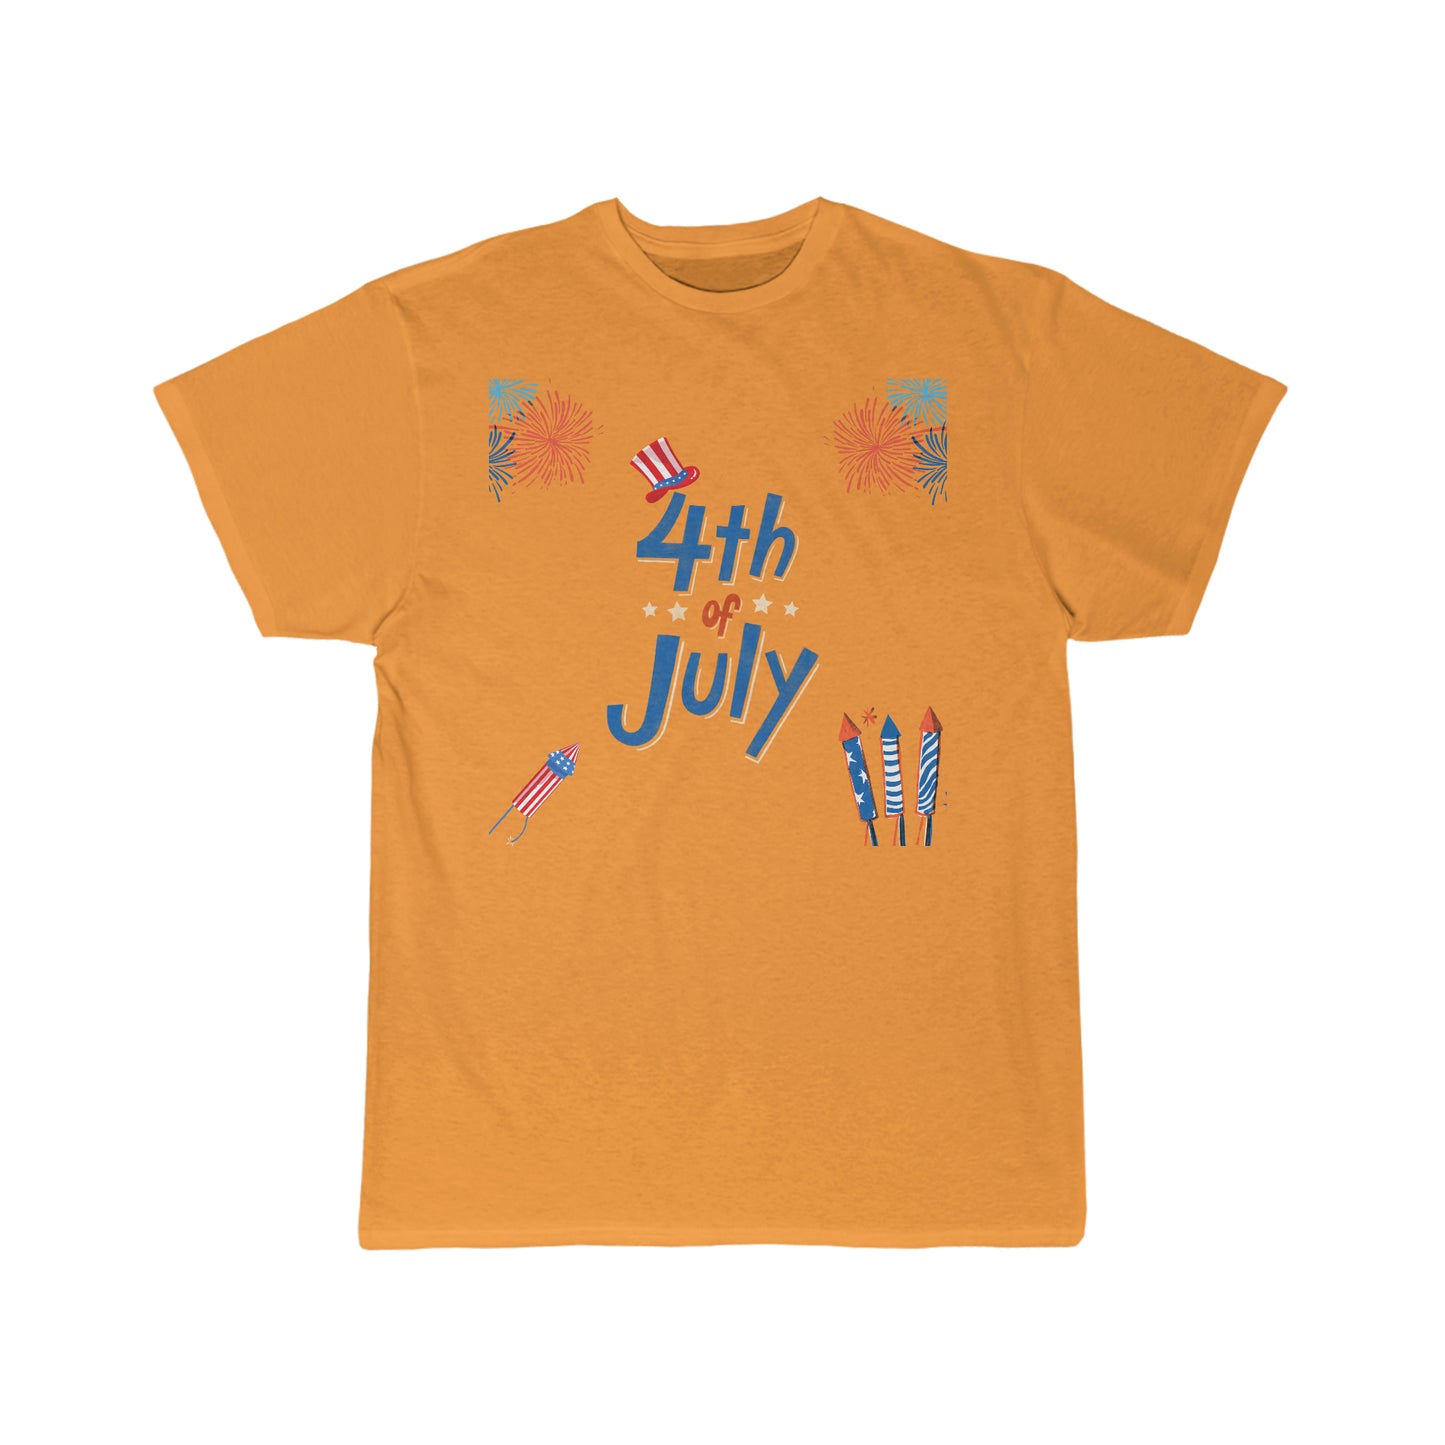 July 4th, USA Flag Shirt, 4th of July Shirt, Big USA T-shirt, USA Comfort Colors Shirt, Comfort Colors USA Flag Tee, USA Comfort Colors Tee, Usa Shirt Men's Short Sleeve Tee